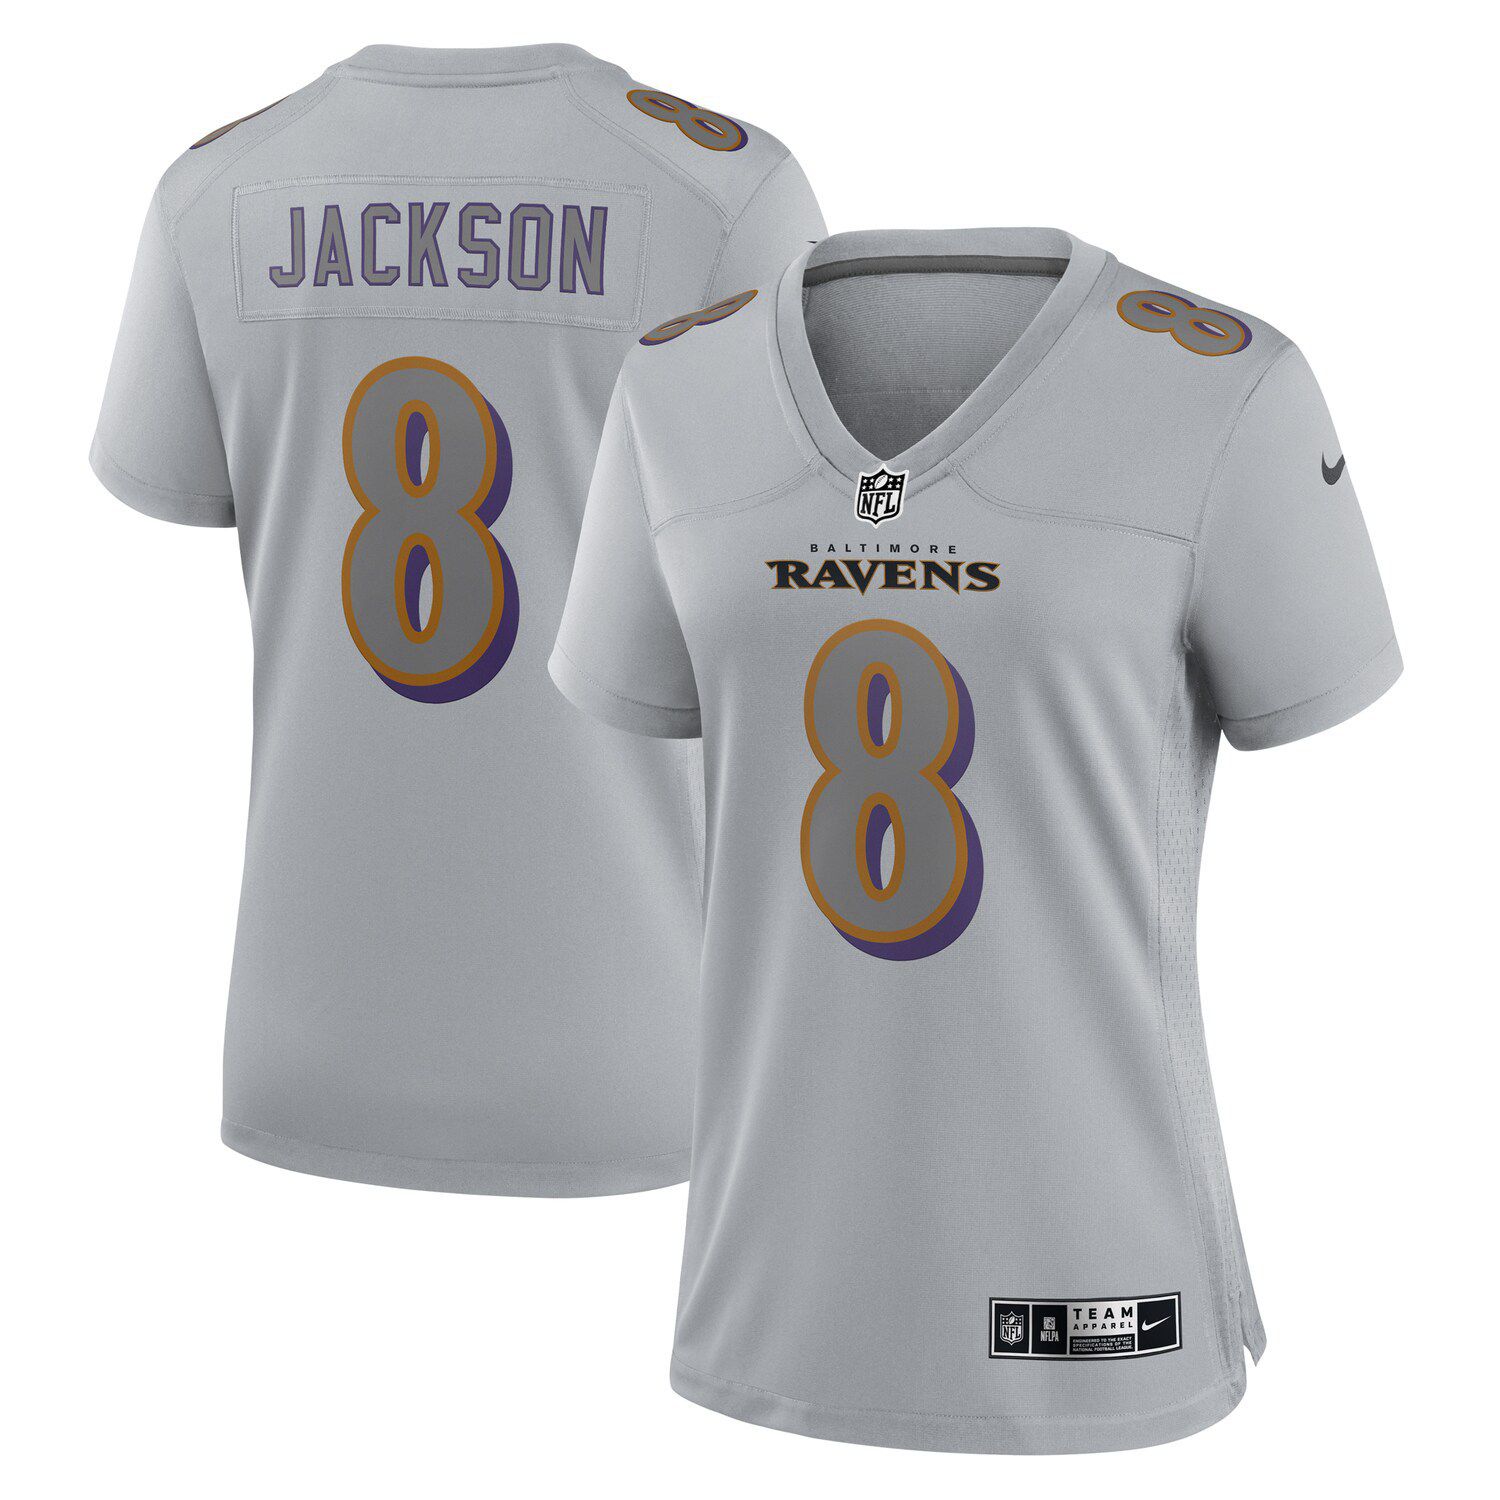 Baltimore Ravens Lamar Jackson Vapor Limited Stitched Black Jersey